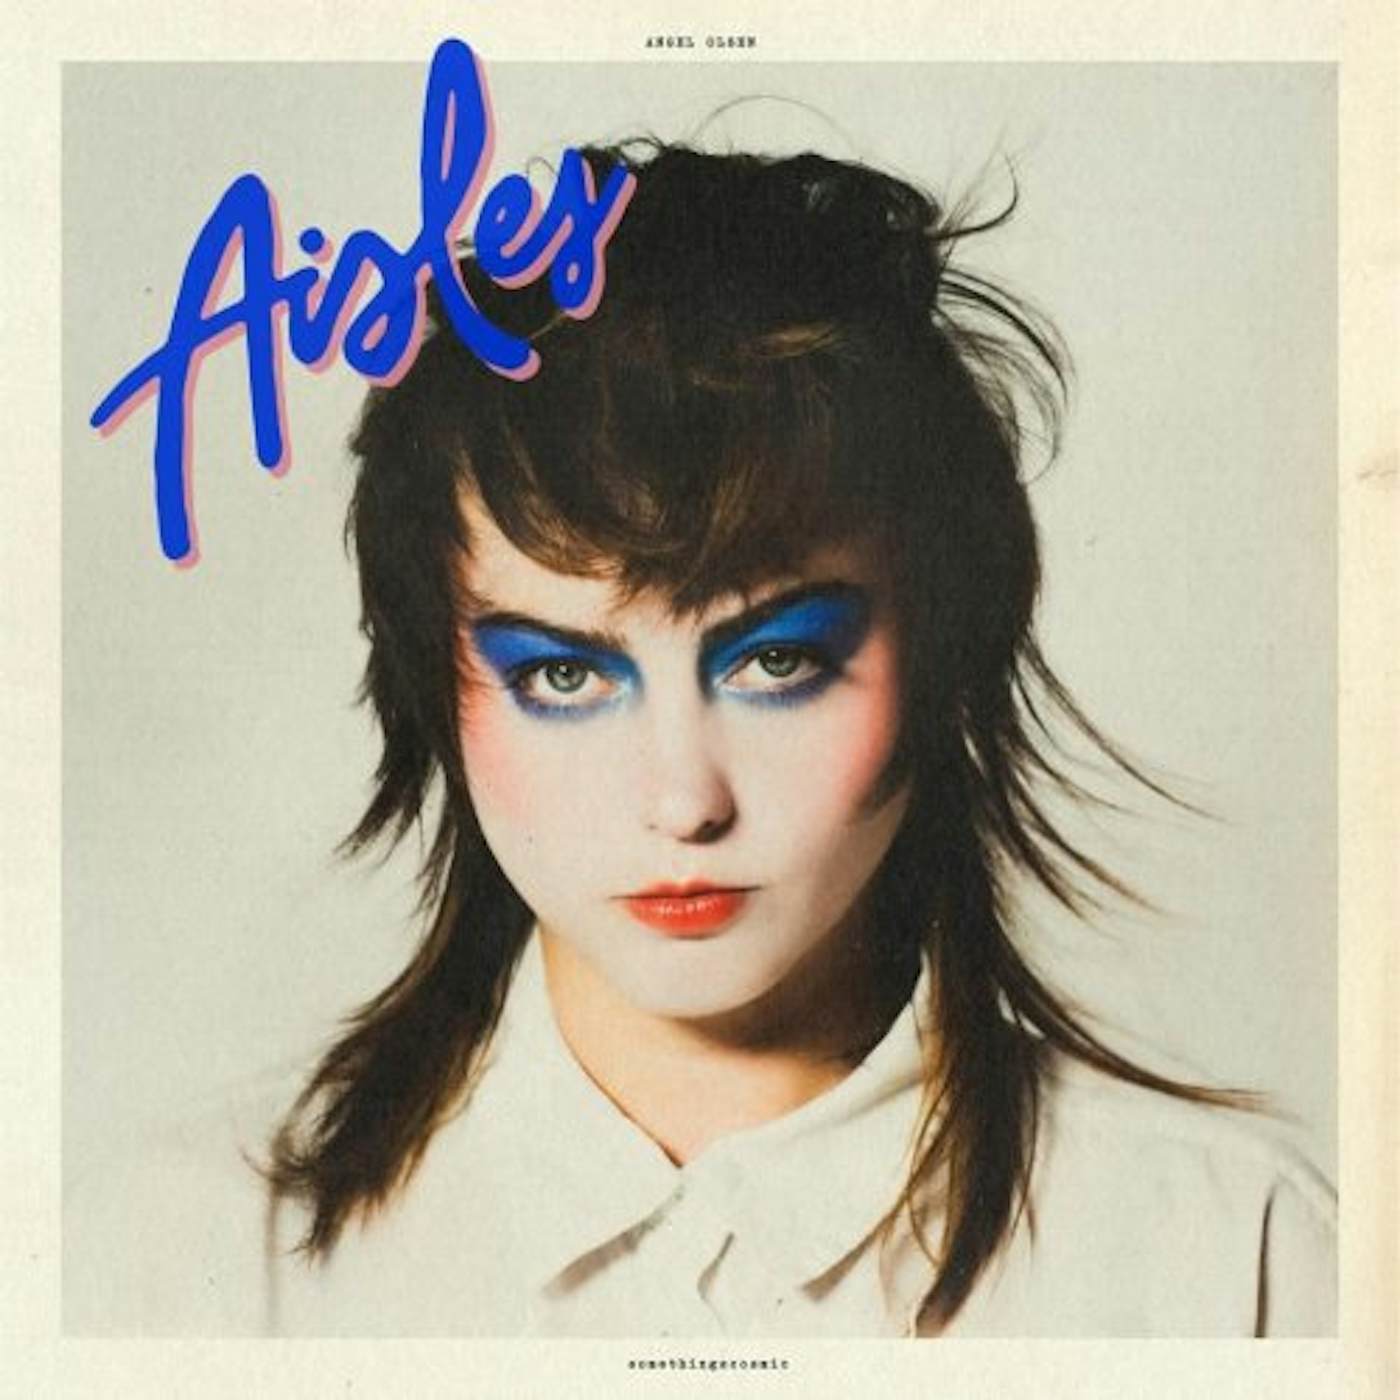 Angel Olsen Aisles Vinyl Record